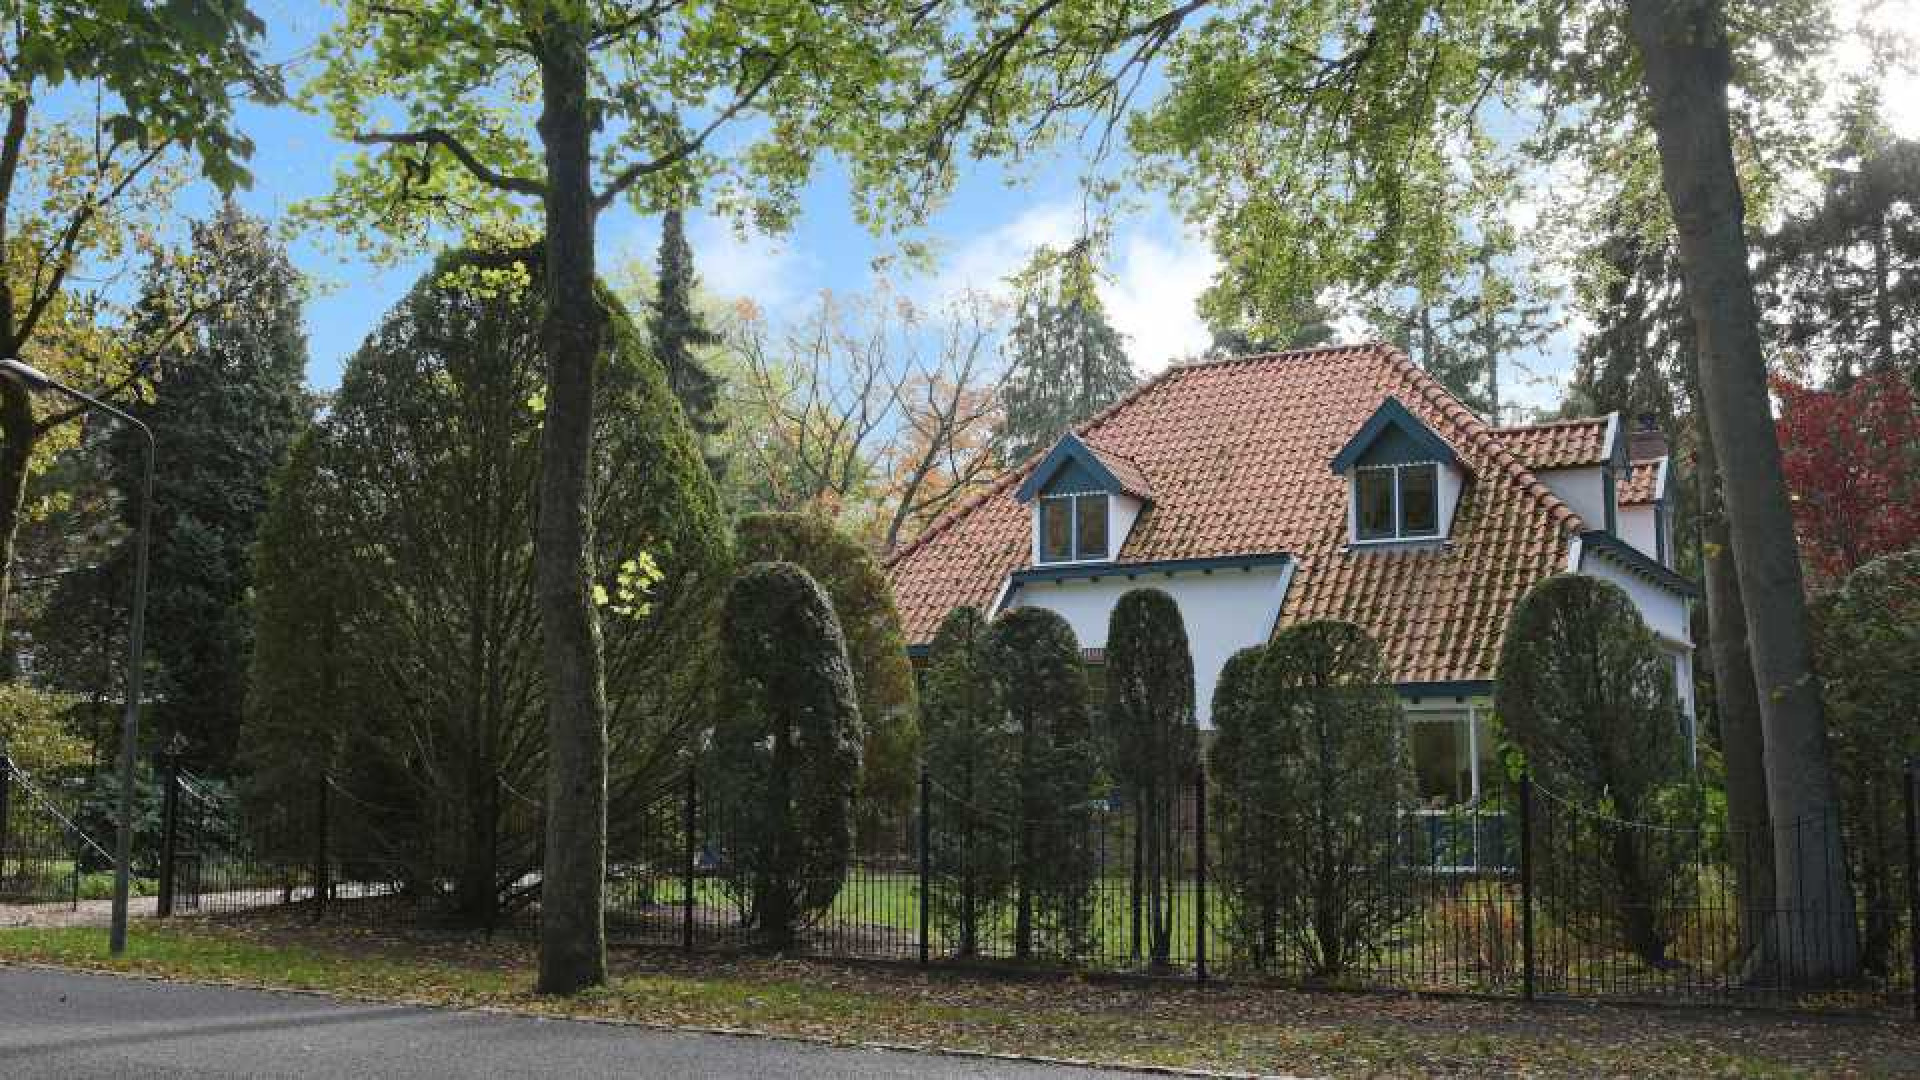 Villa overleden Sjoukje Hooymaayer verkocht 1